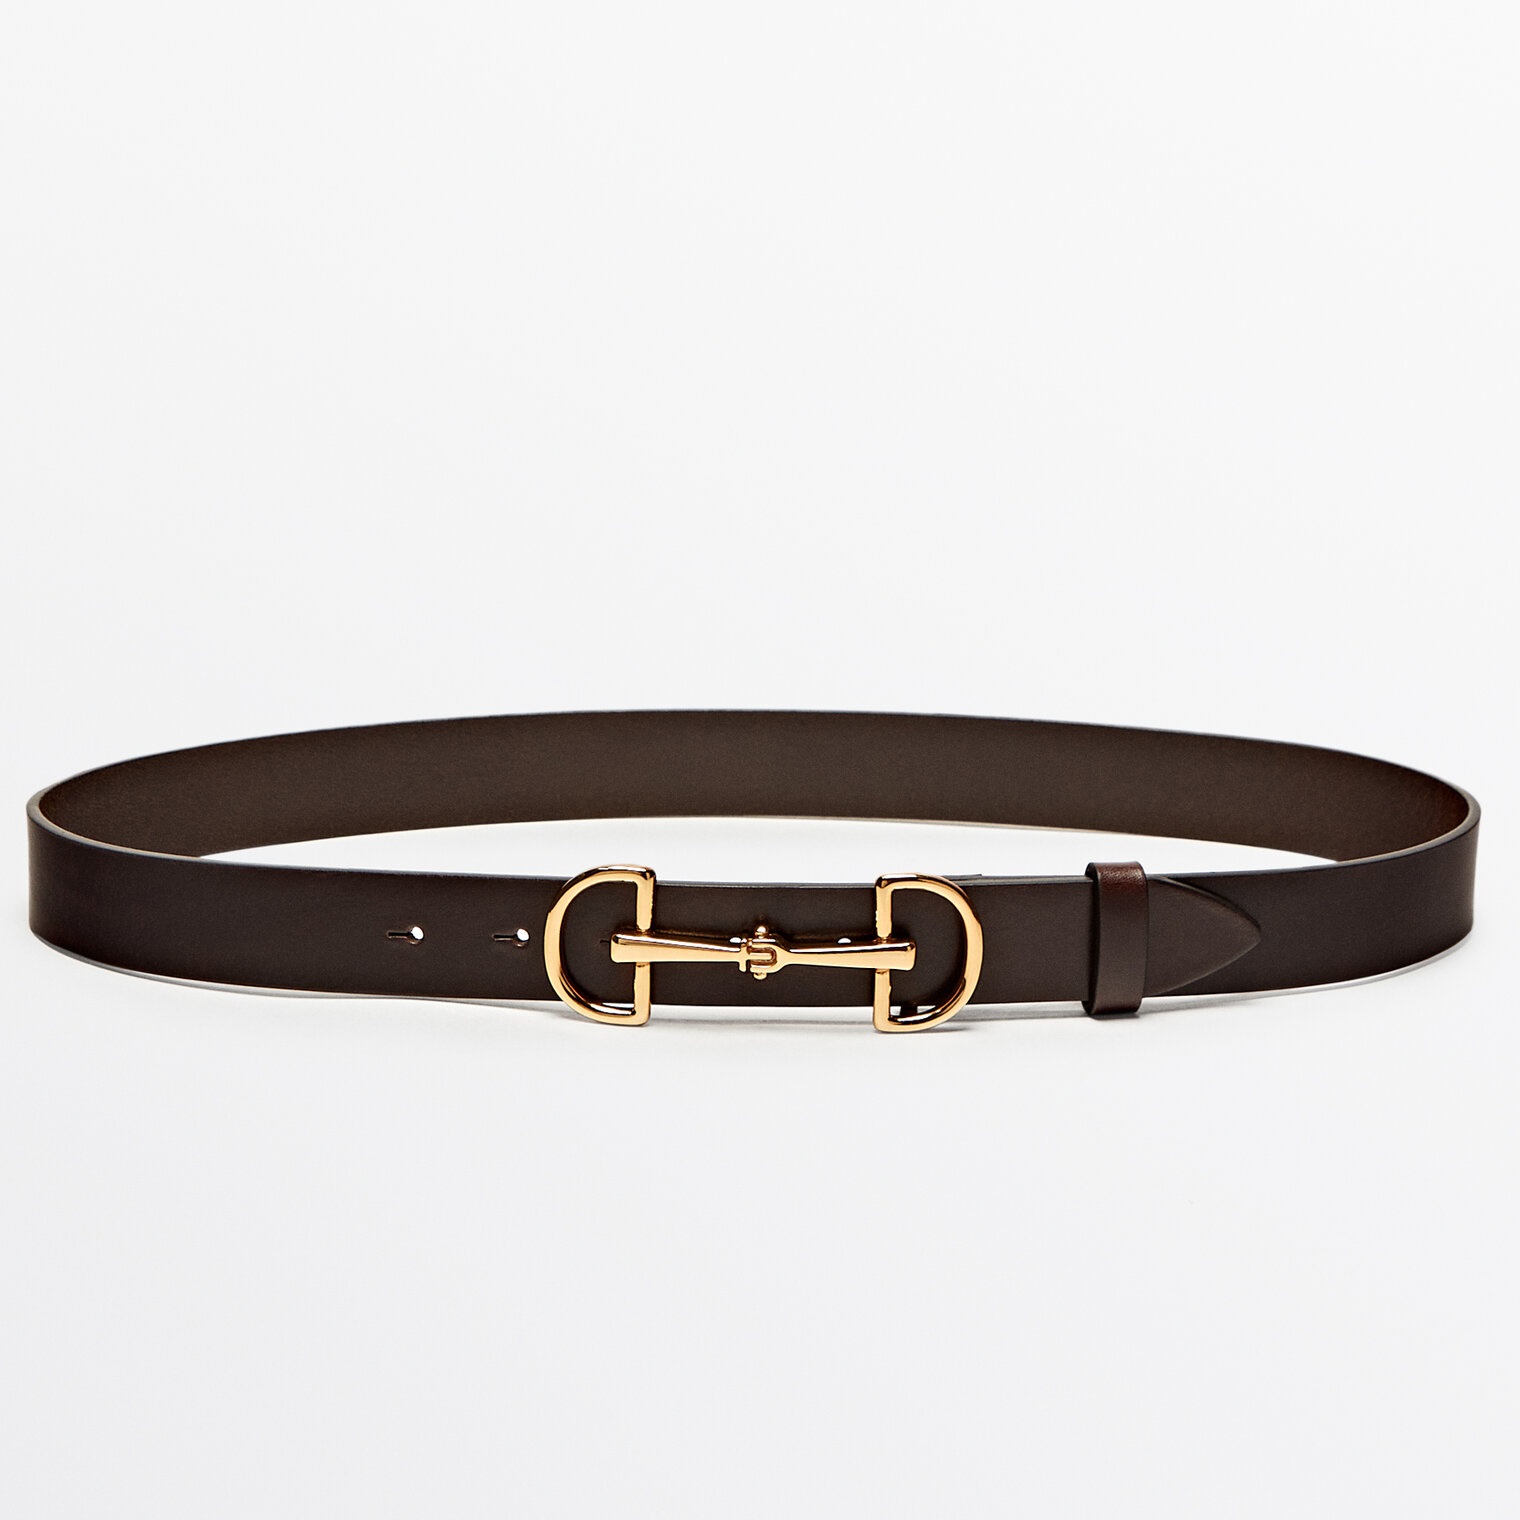 Ремень Massimo Dutti Leather With Double Long Buckle, коричневый/золотой